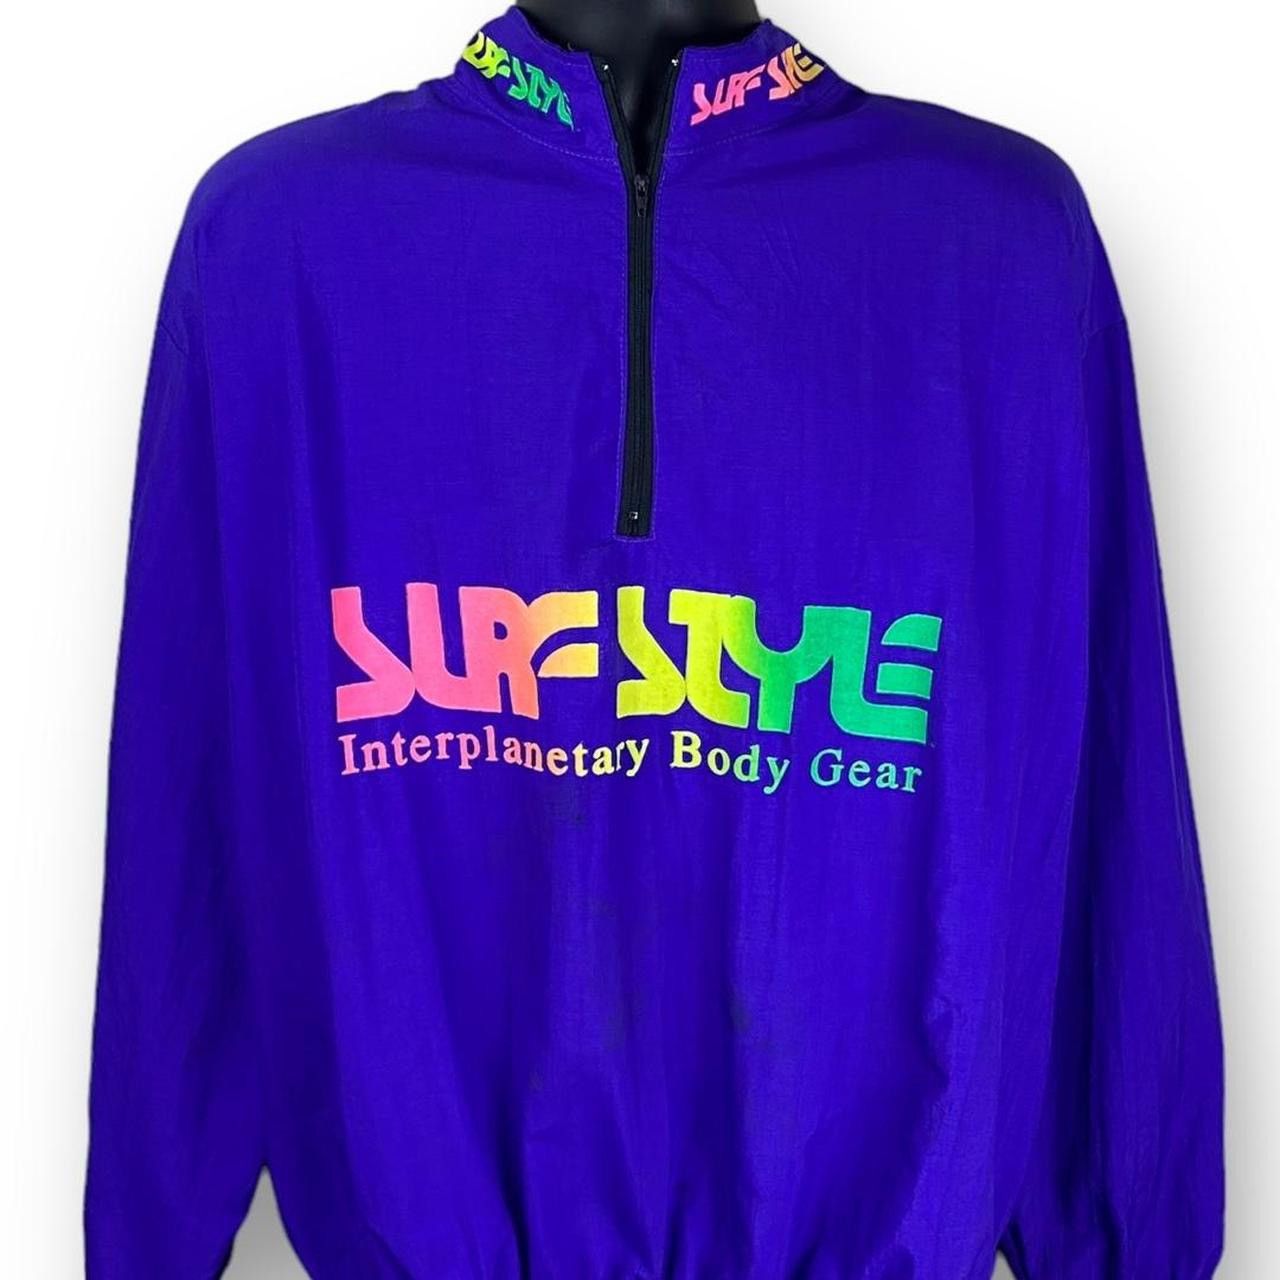 Vintage 90s Windbreaker SURF STYLE Jacket Neon Iridescent Purple